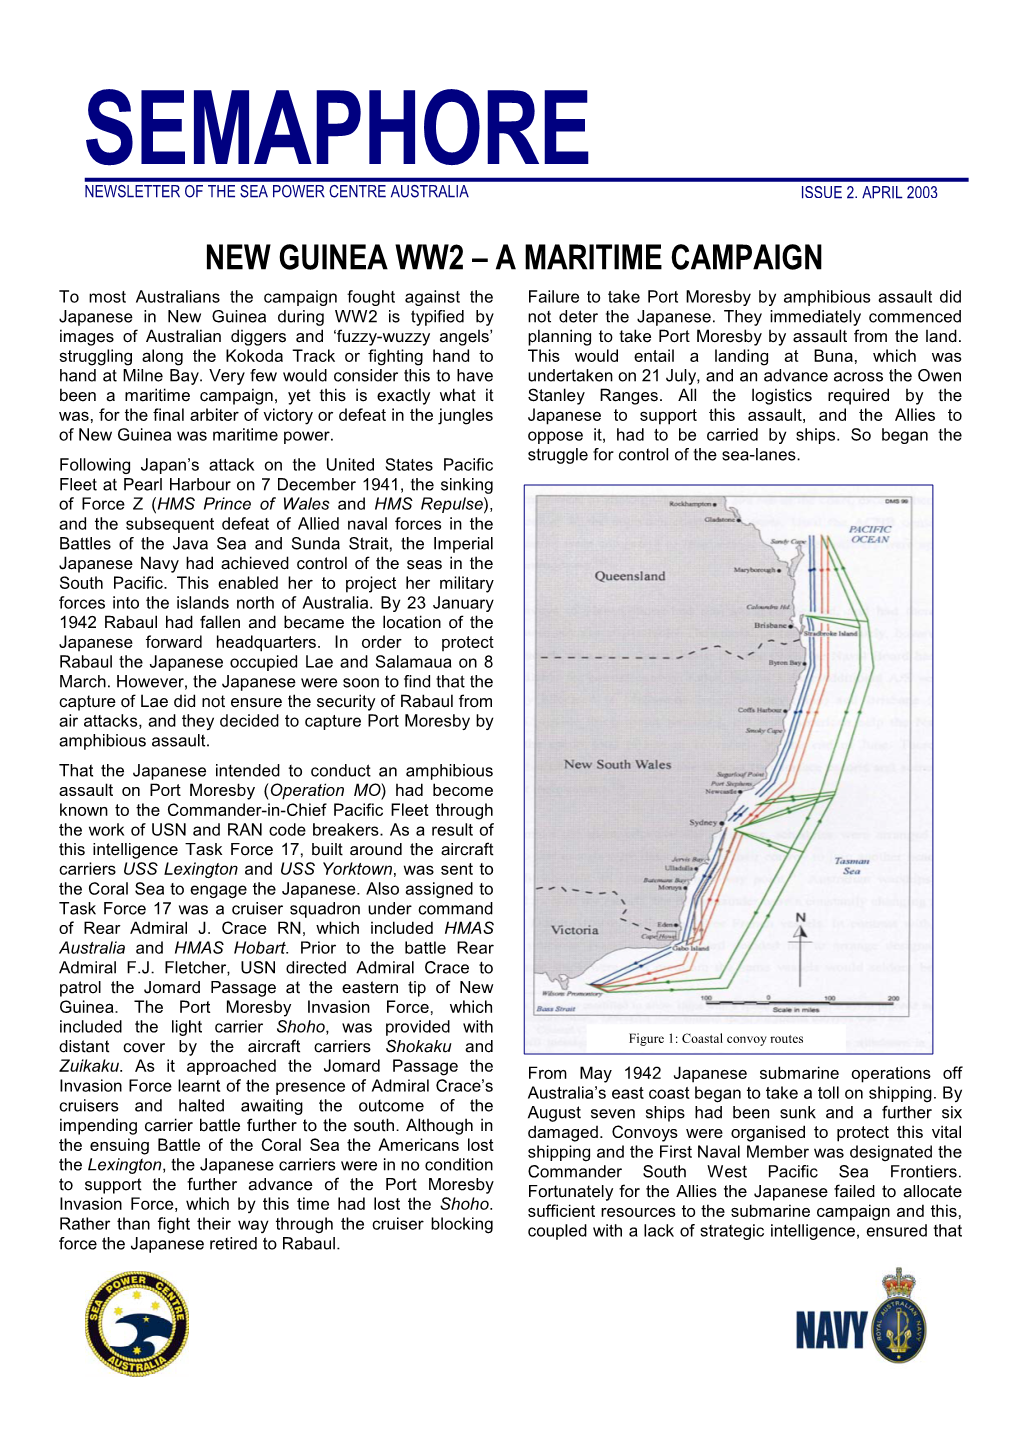 Semaphore Newsletter of the Sea Power Centre Australia Issue 2, April 2003